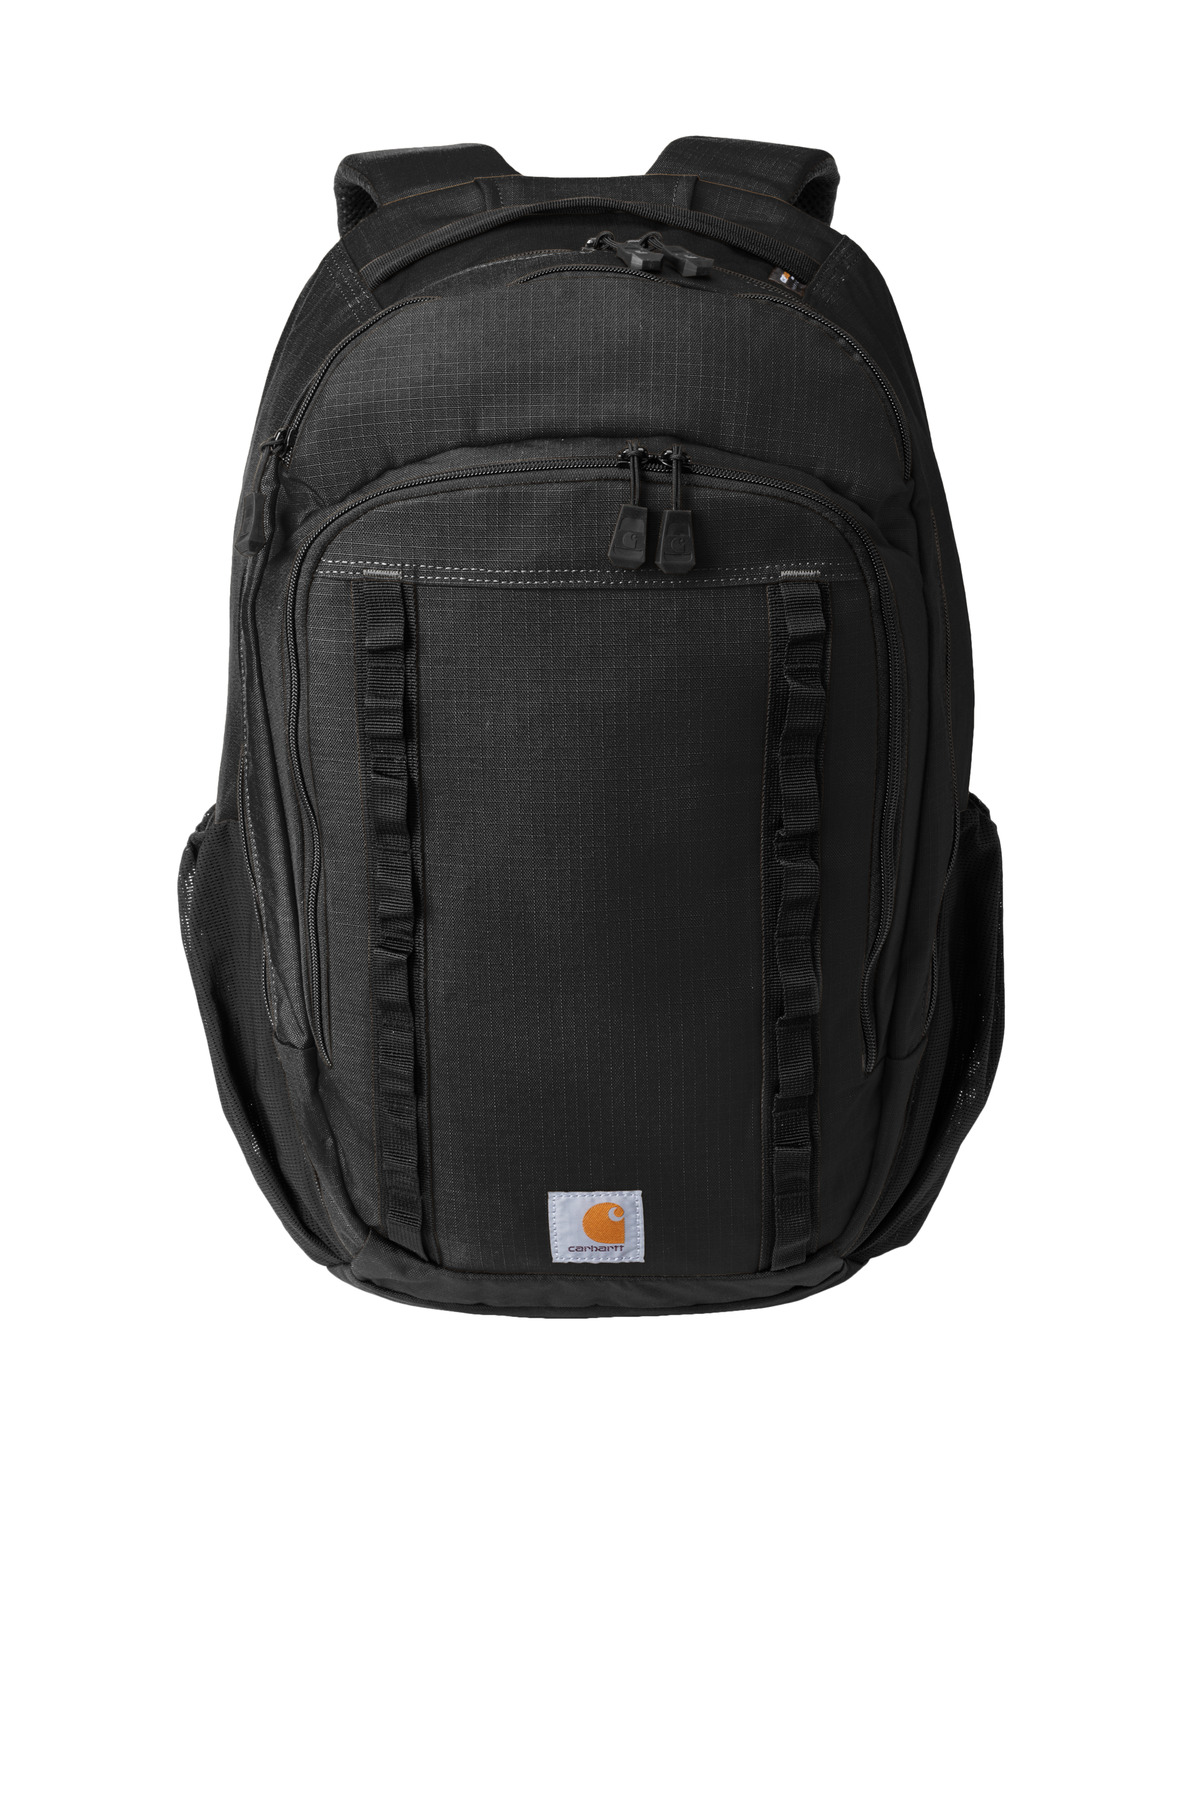 Carhartt 25L Ripstop Backpack-